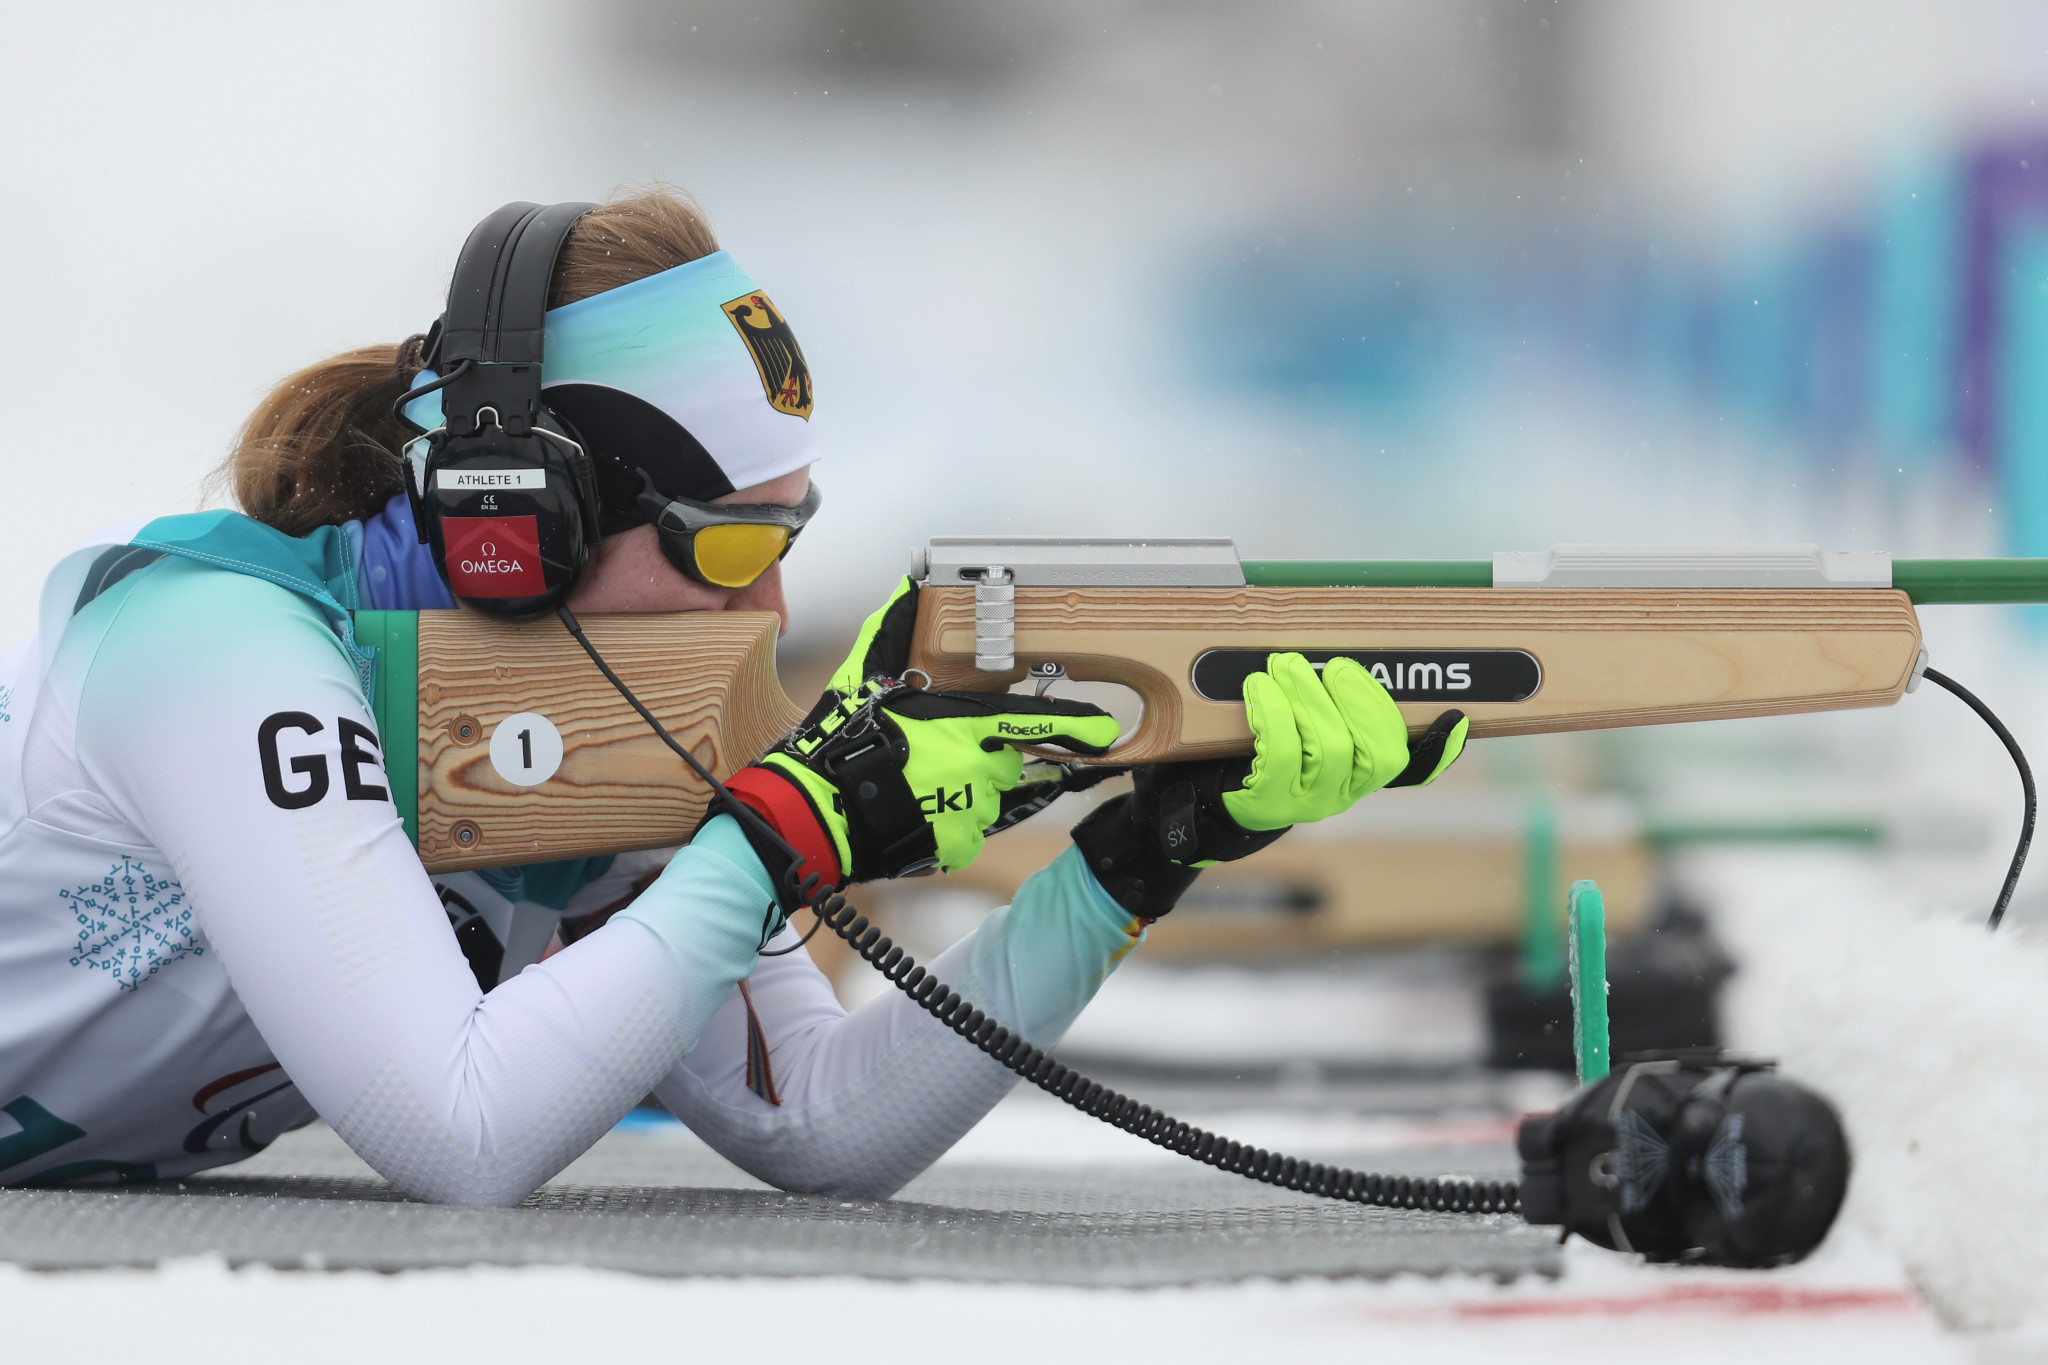 World Para Snow Sports announces deal with biathlon supplier Ecoaims